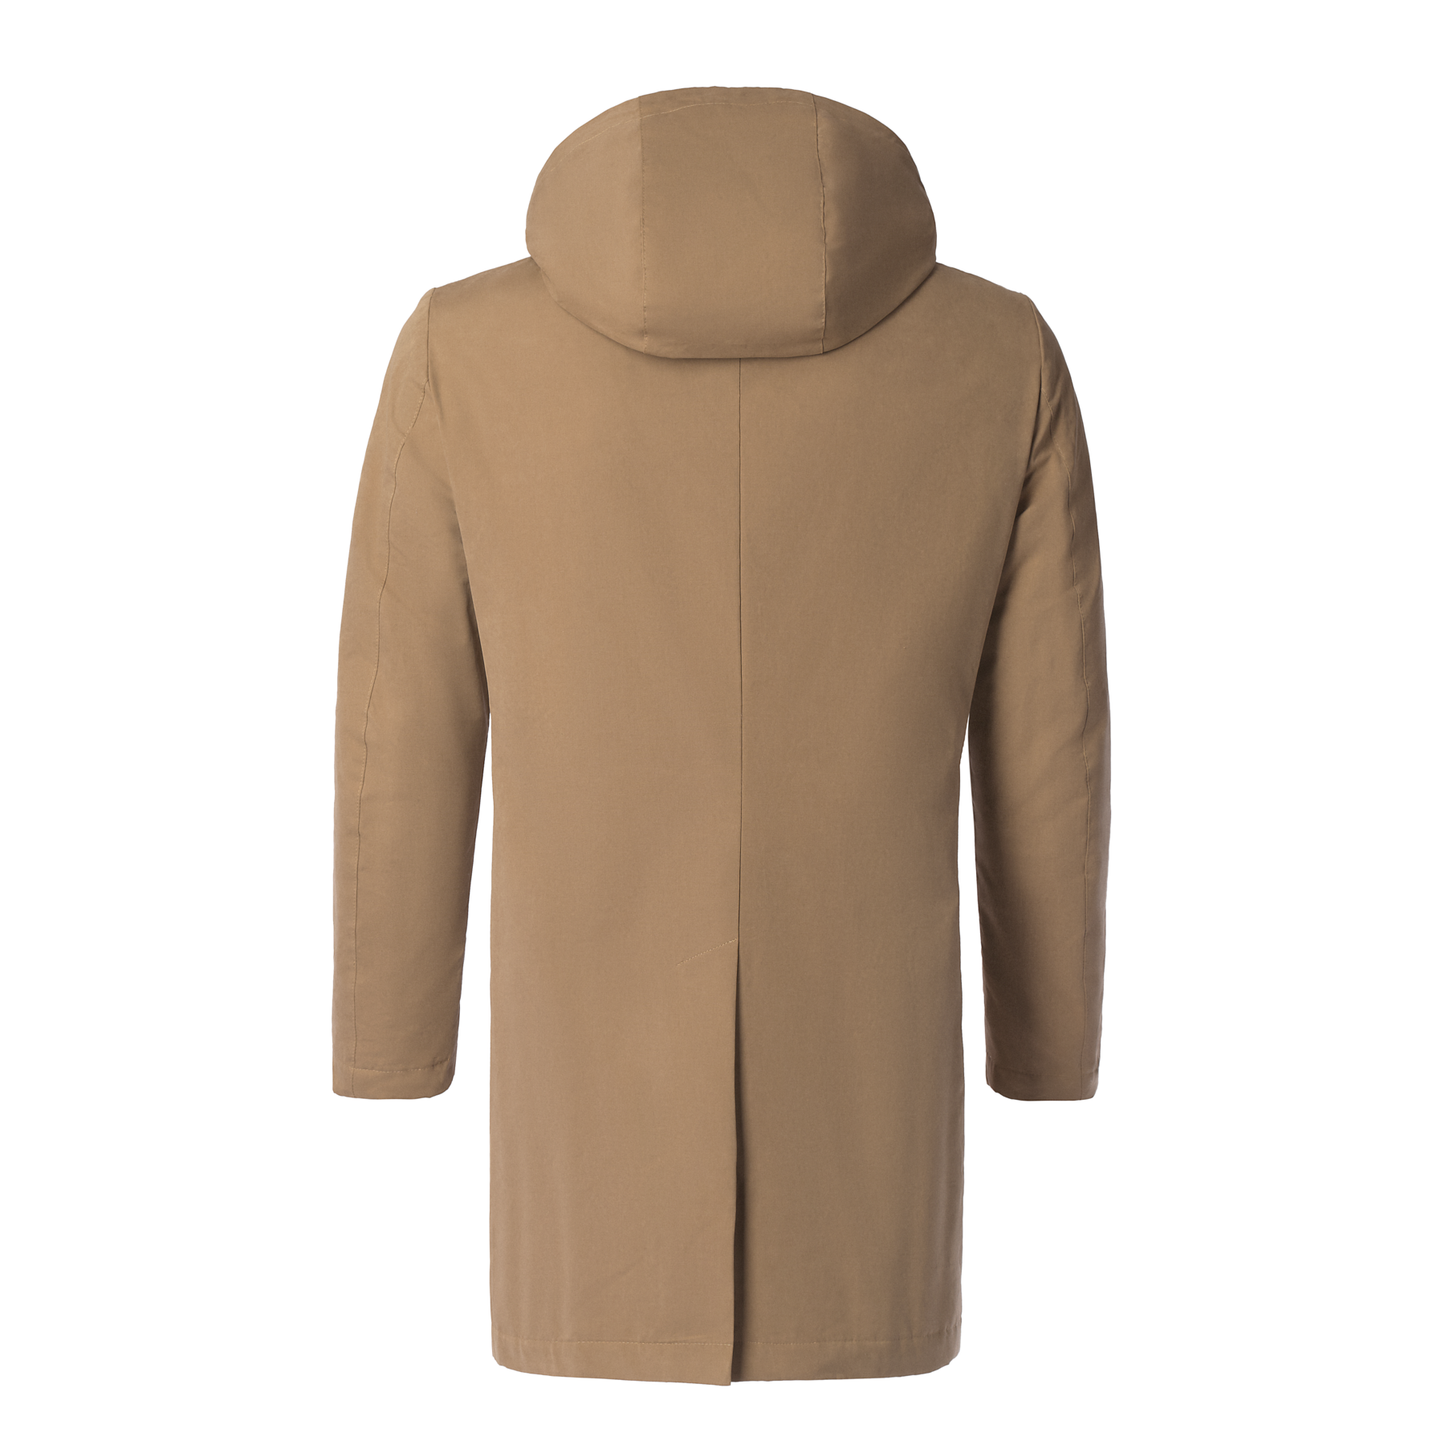 Luigi Borrelli Hooded Cotton-Blend Jacket in Beige - SARTALE